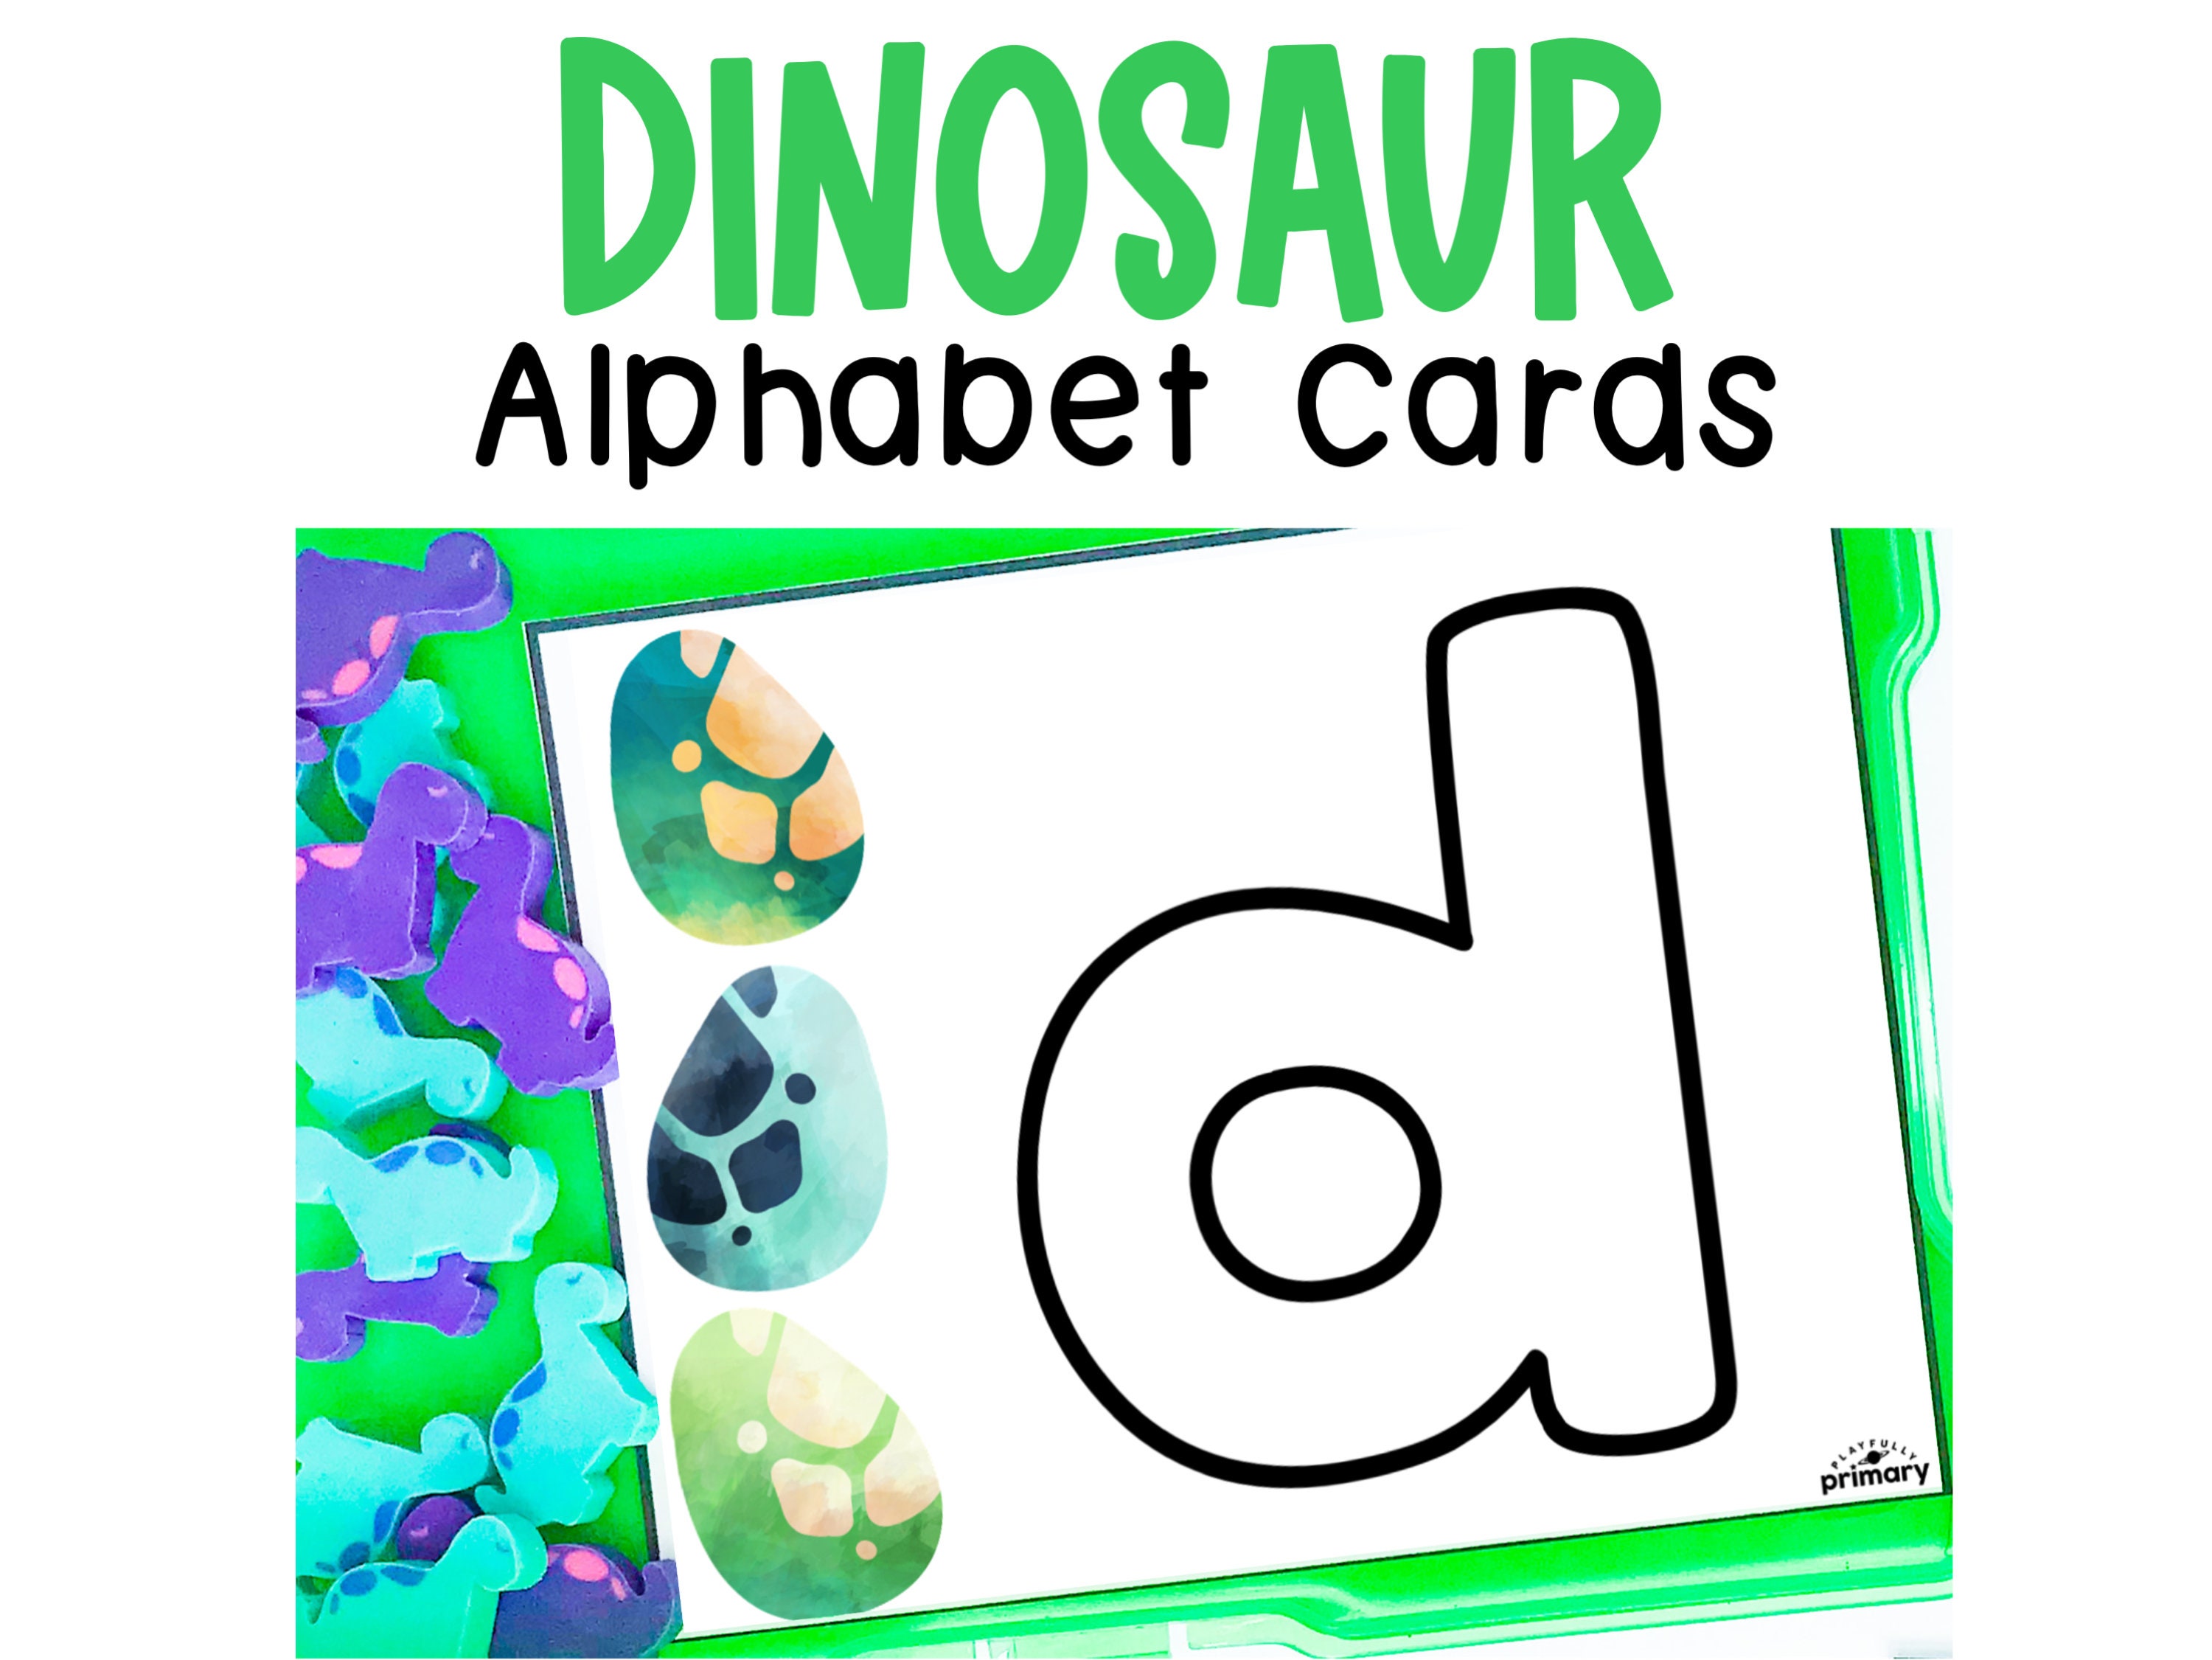 Dinosaur Alphabet Playdough Mats